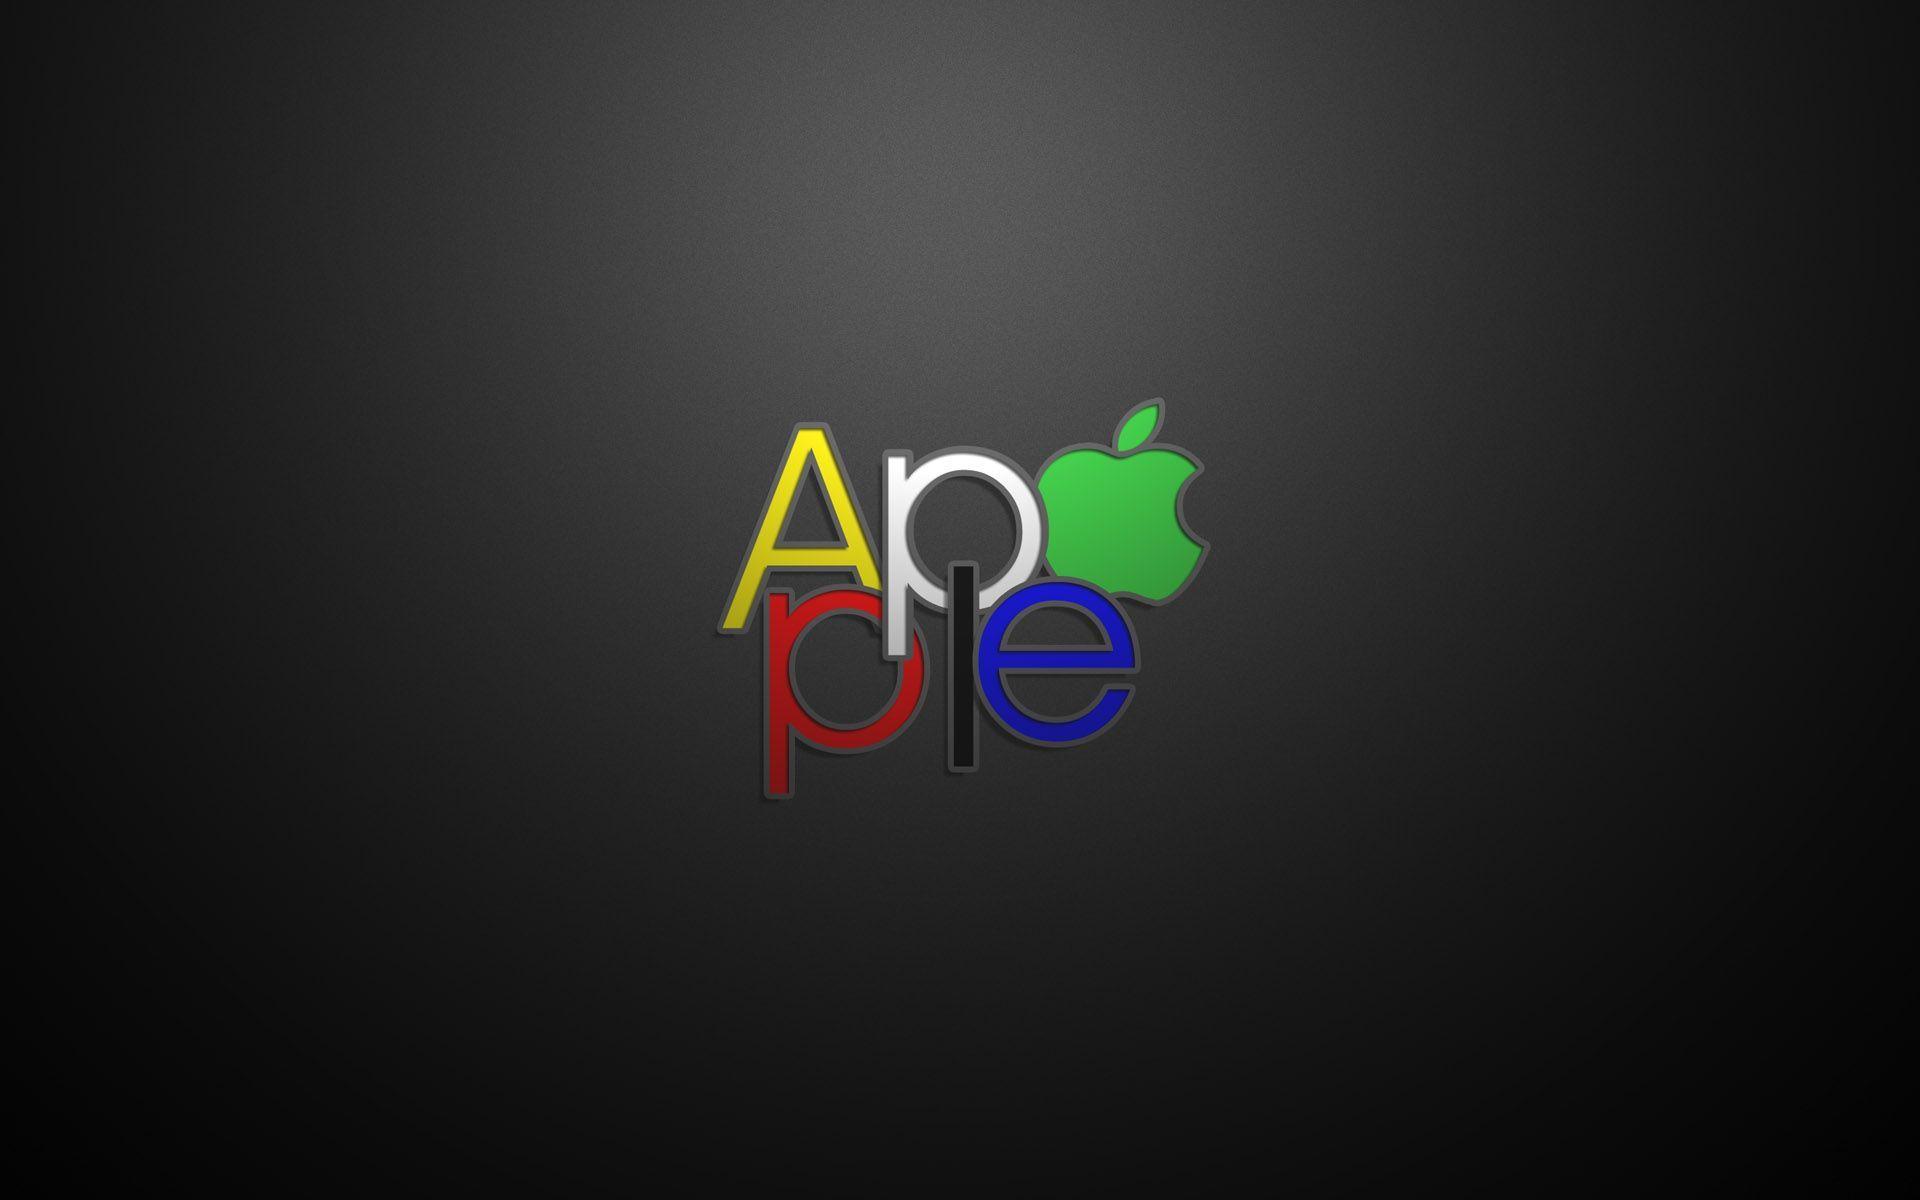 Apple Desktop Wallpapers HD - Wallpaper Cave